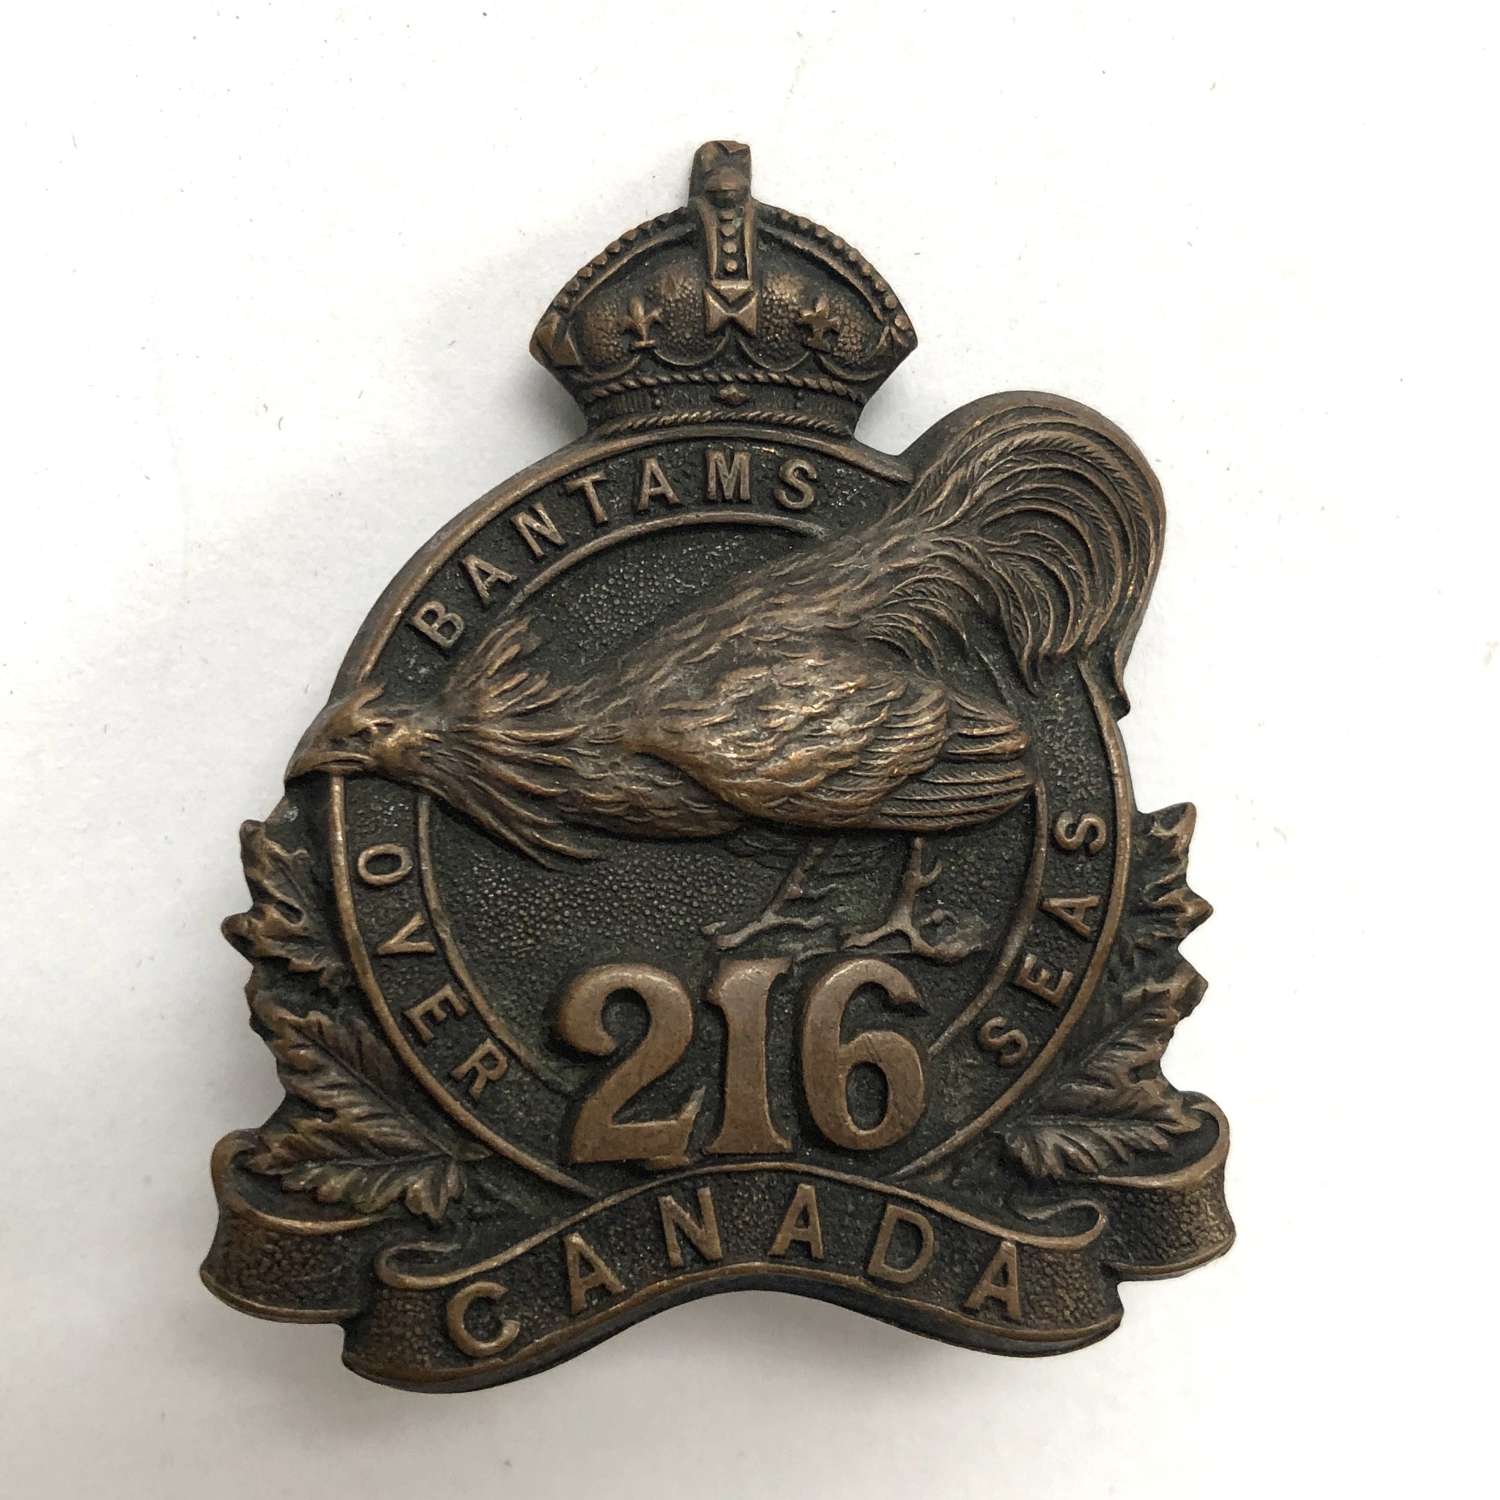 Canadian 216th (Toronto Bantams) Bn CEF WW1 cap badge